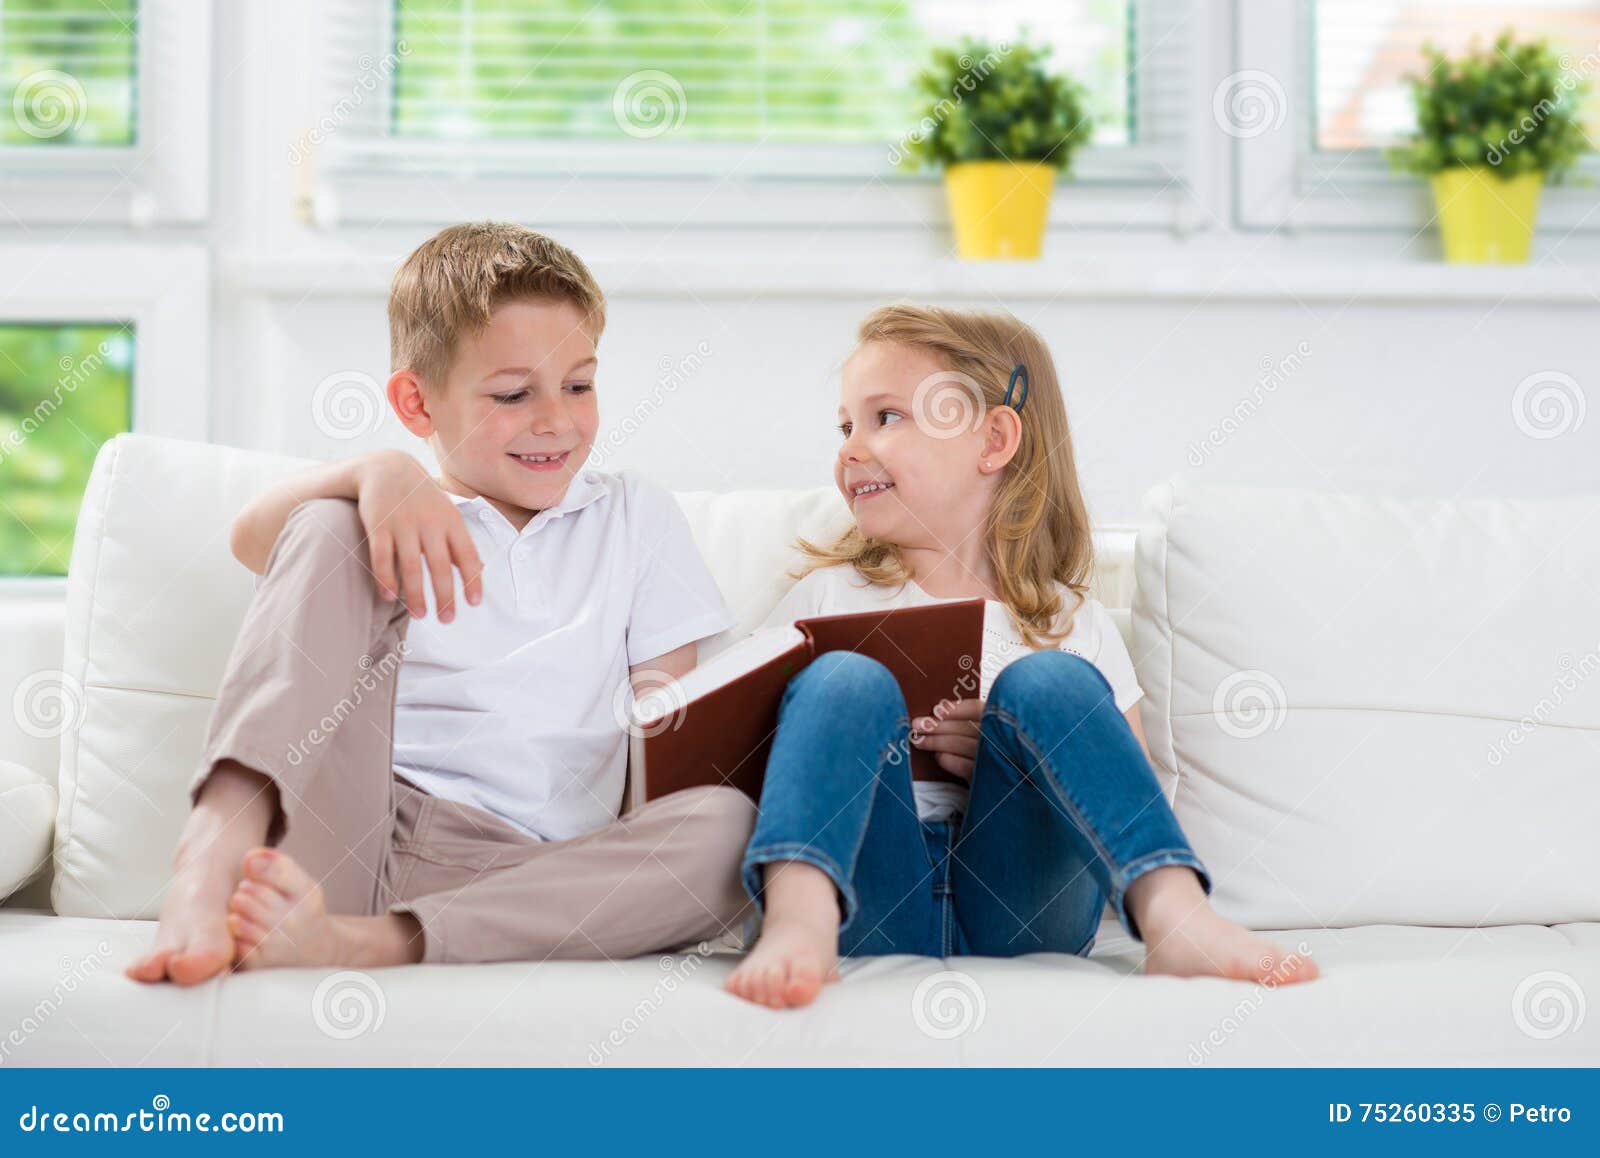 My sister to read books. Брат и сестра стоковые. Brother чтение. Мелкие братья спорят на диване. Брат читает книгу сестре.